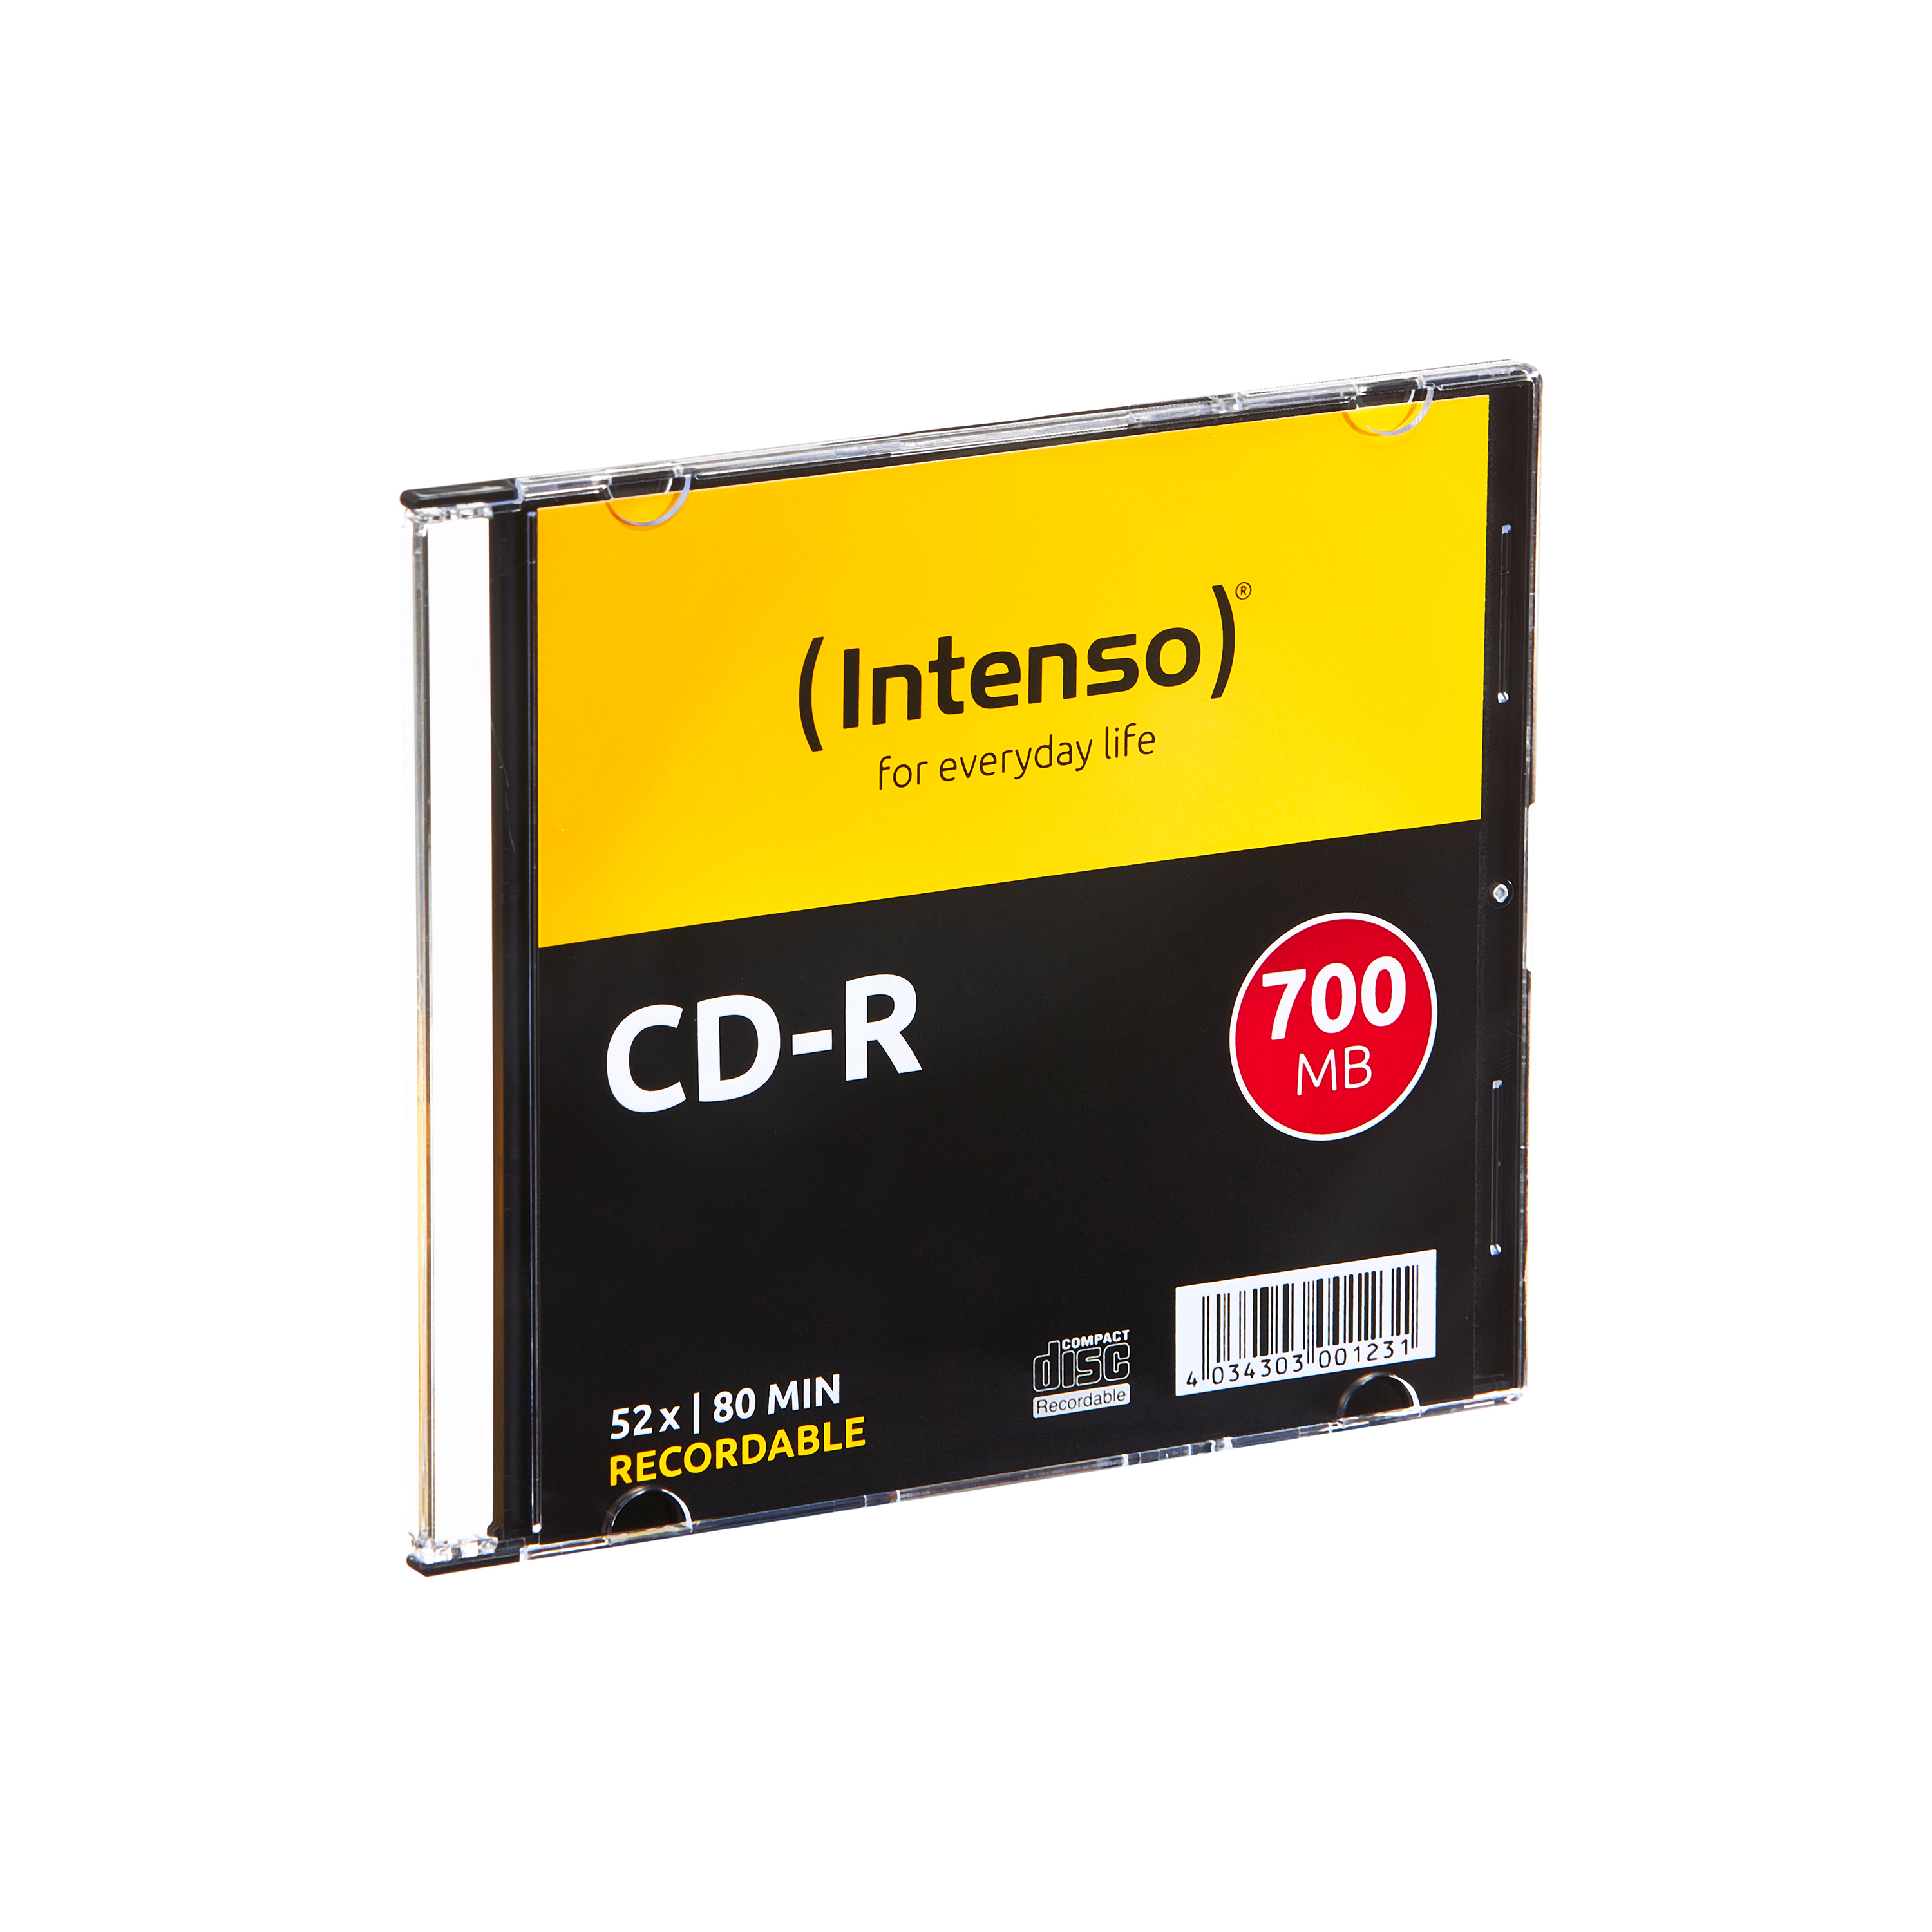 CD-R  Intenso 700MB  10pcs Slimcase